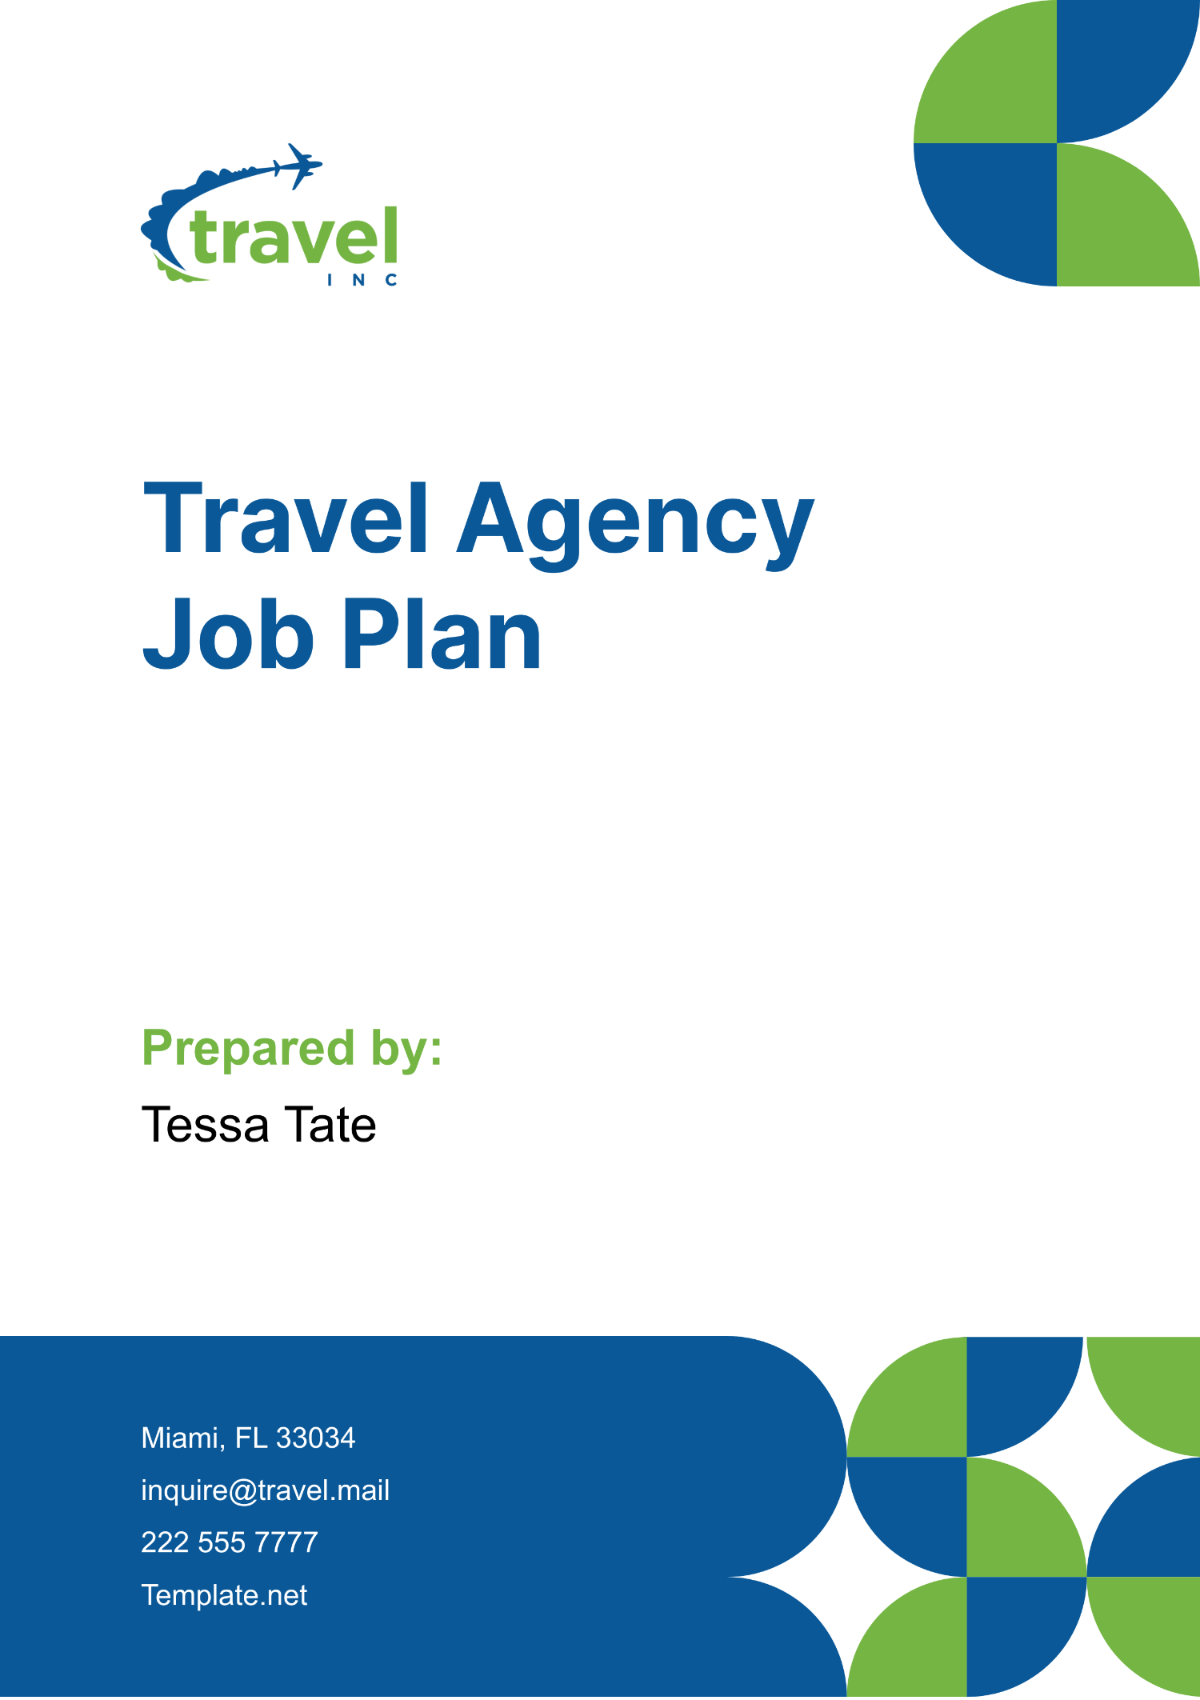 Travel Agency Job Plan Template